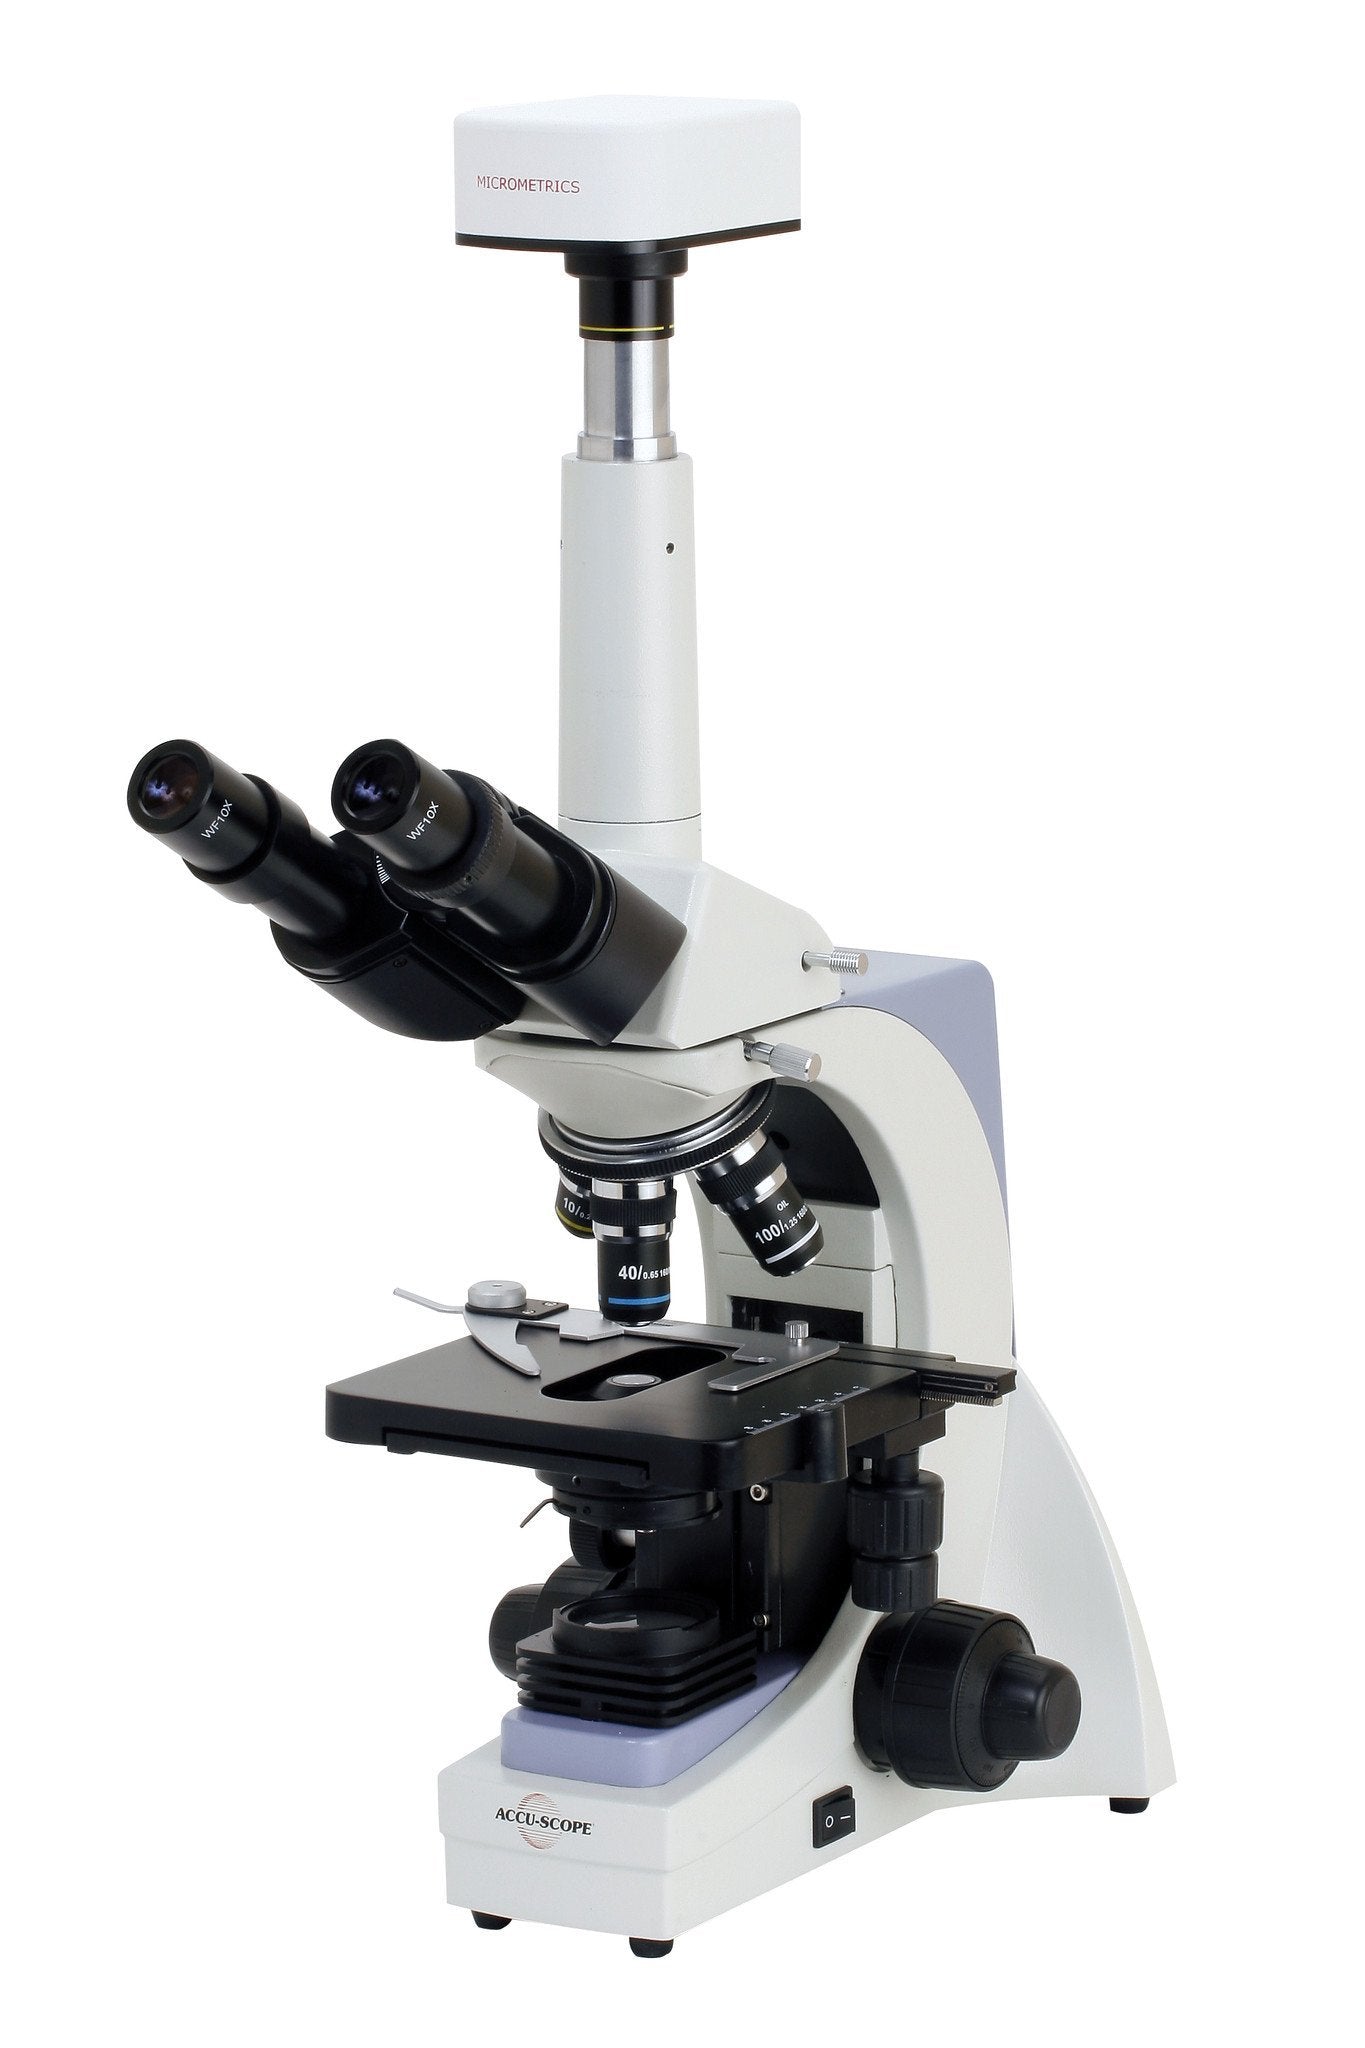 Accu-Scope 3002 Microscope Series - Microscope Central
 - 2